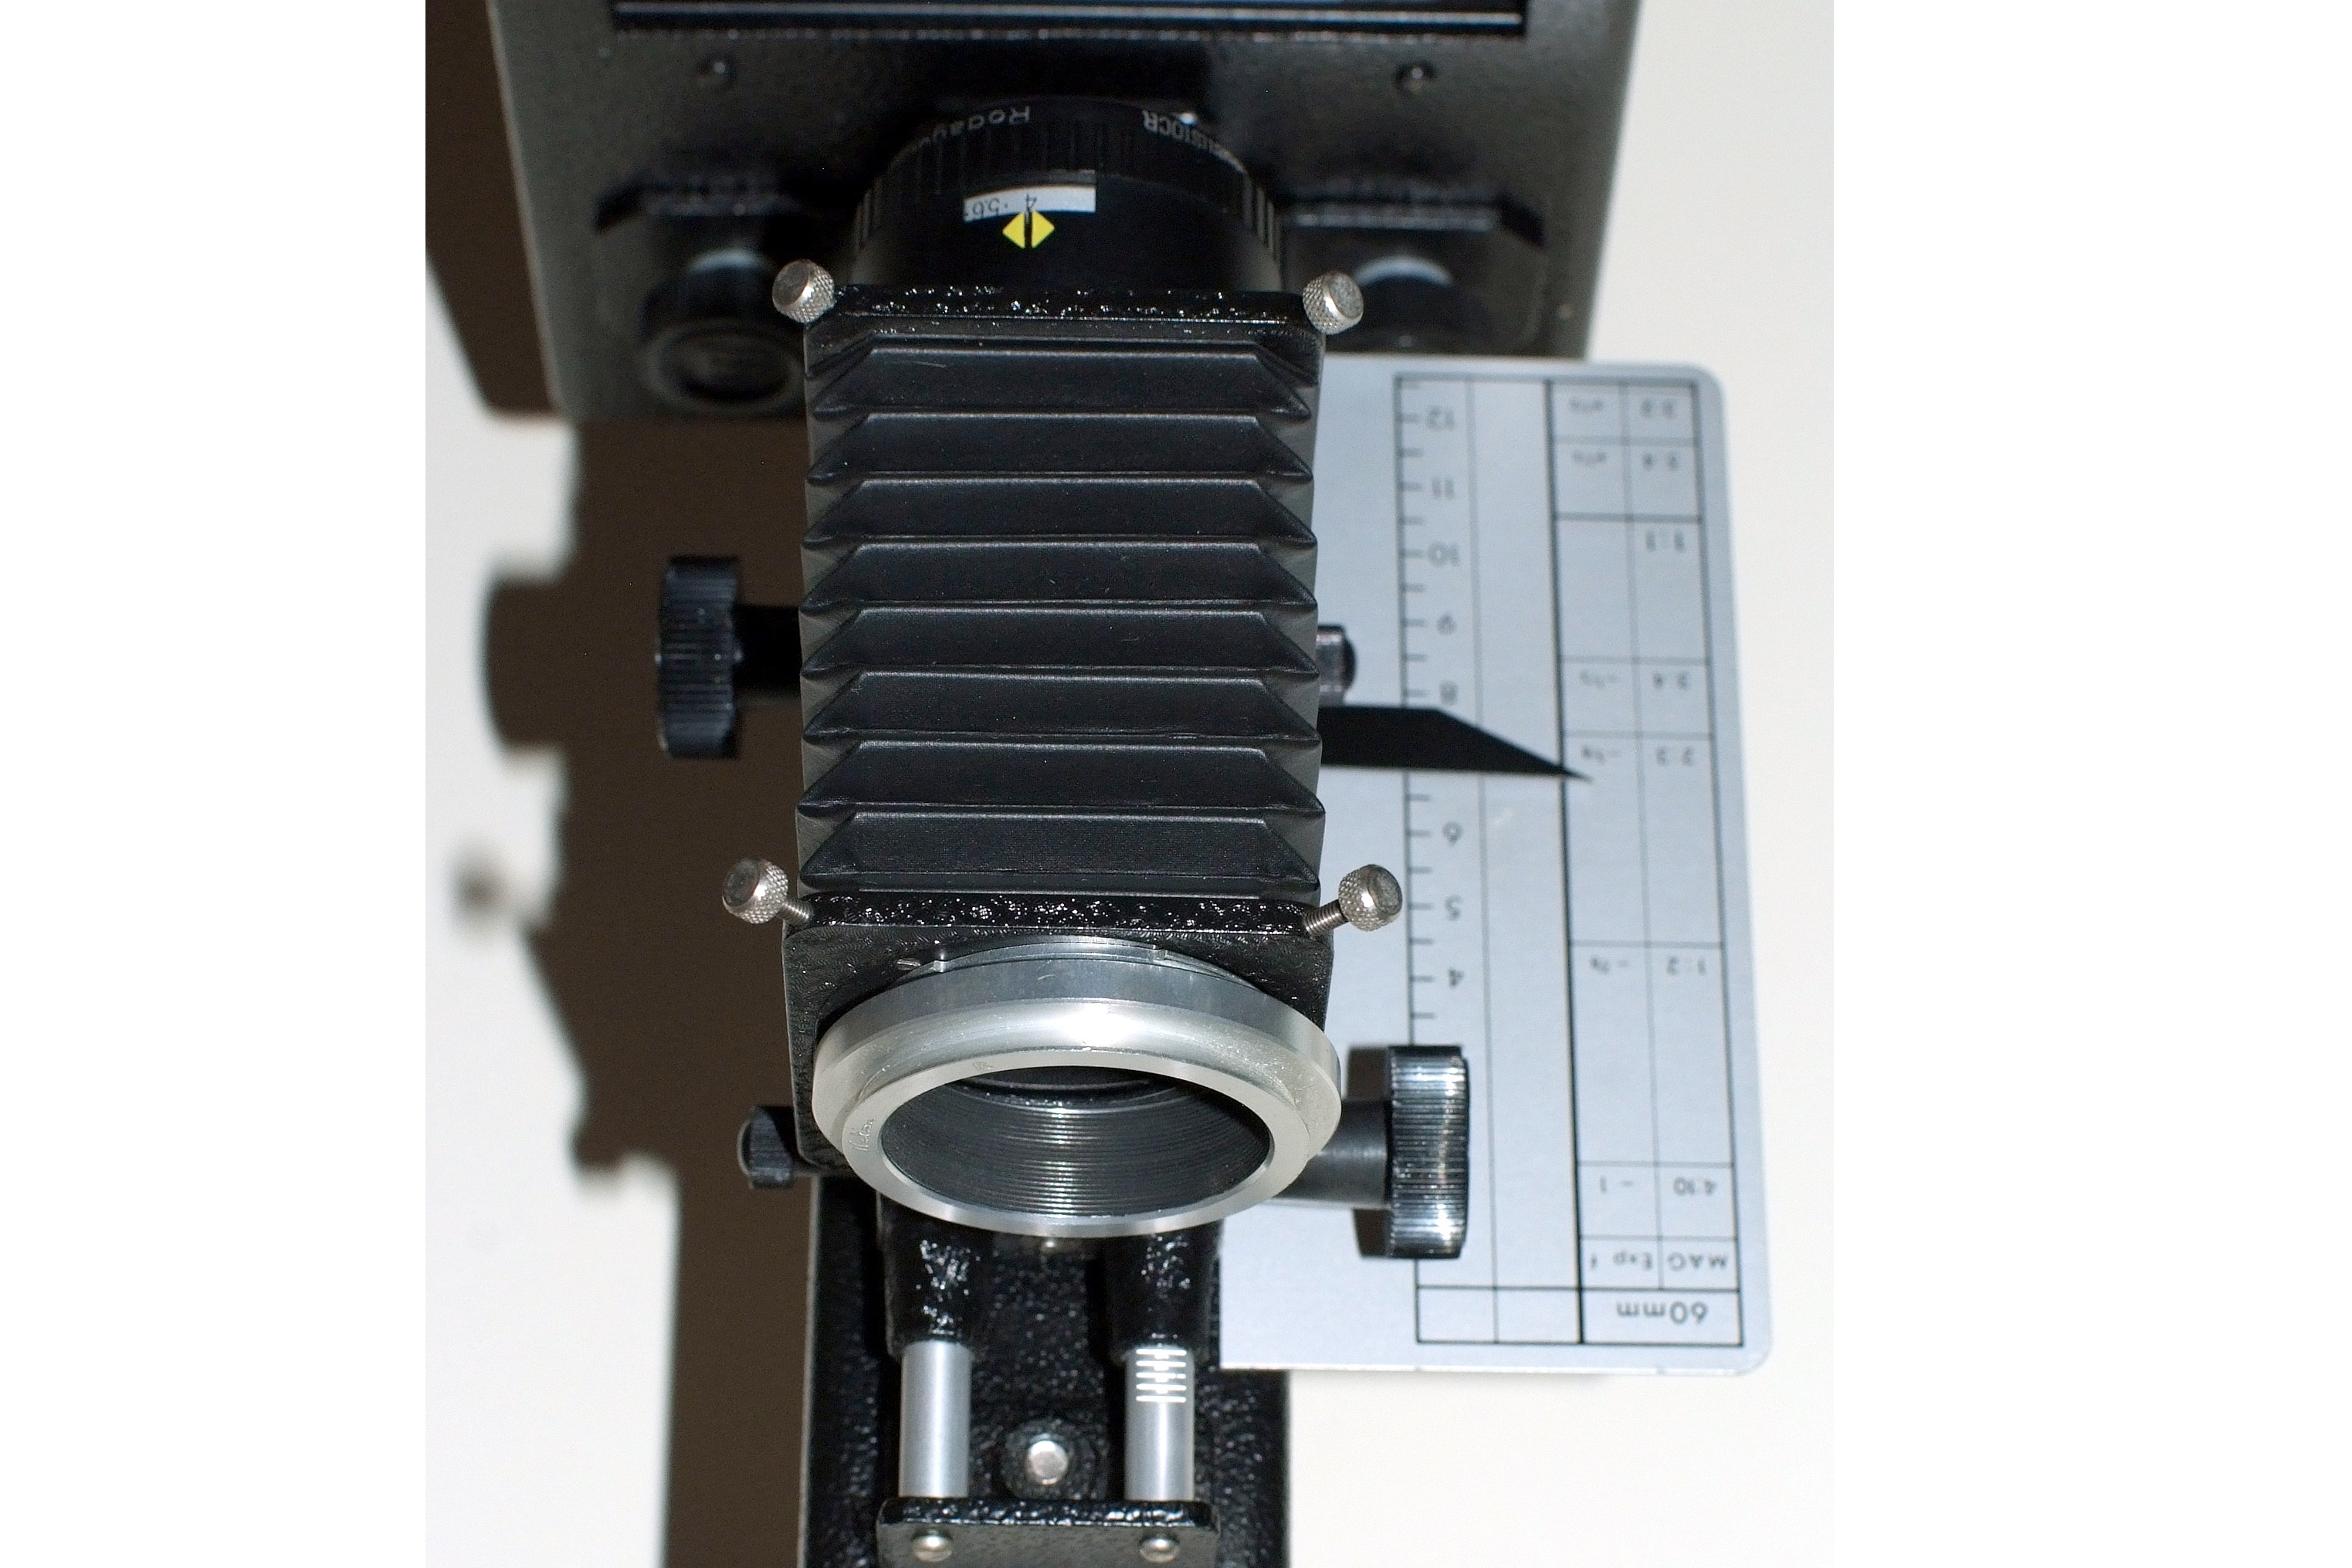 Bowens Illumitran 3S Slide Copier with Contrast Control Unit. - Image 4 of 4